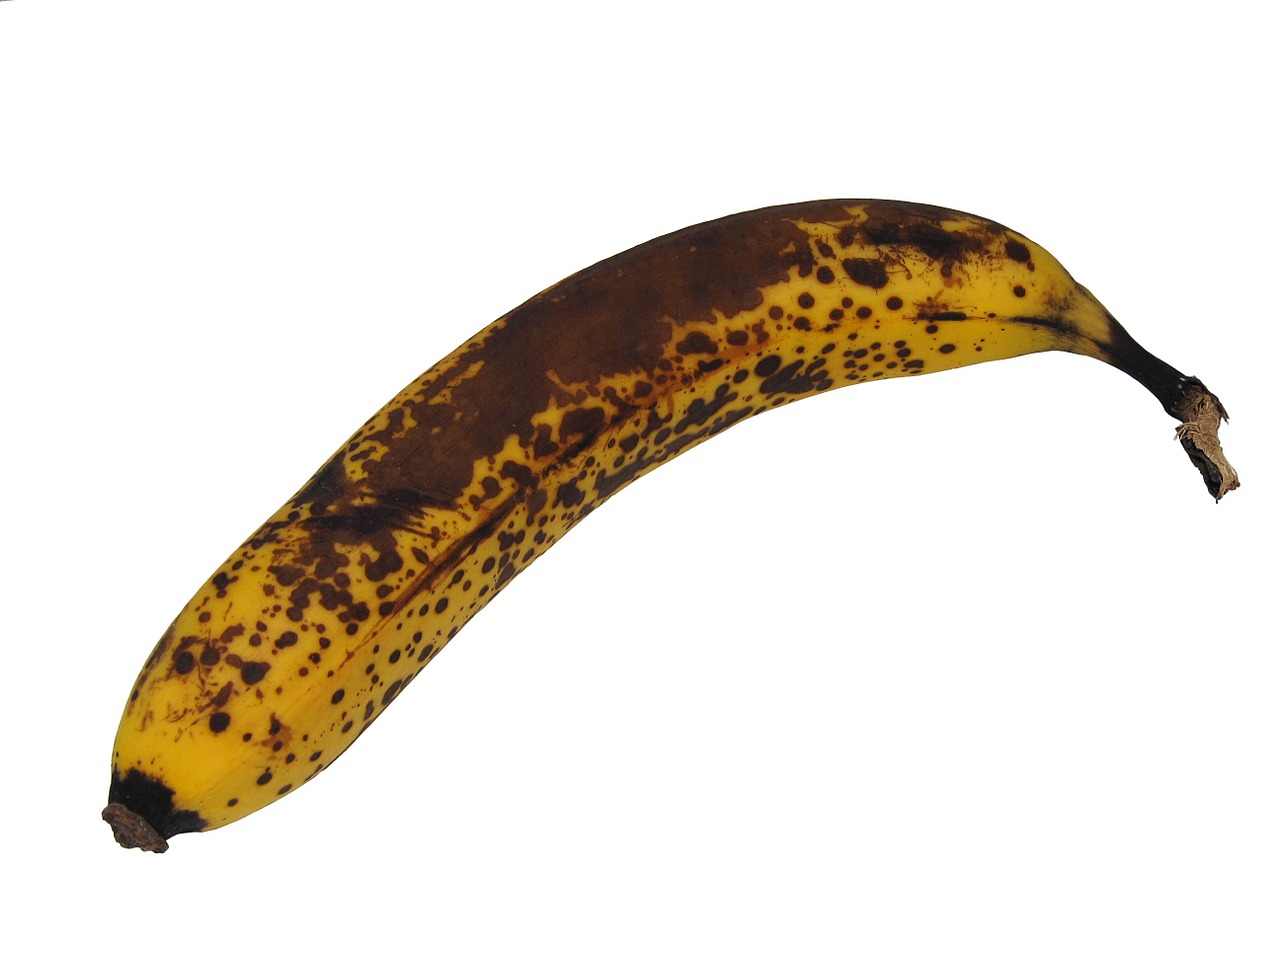 banana mature spotted free photo